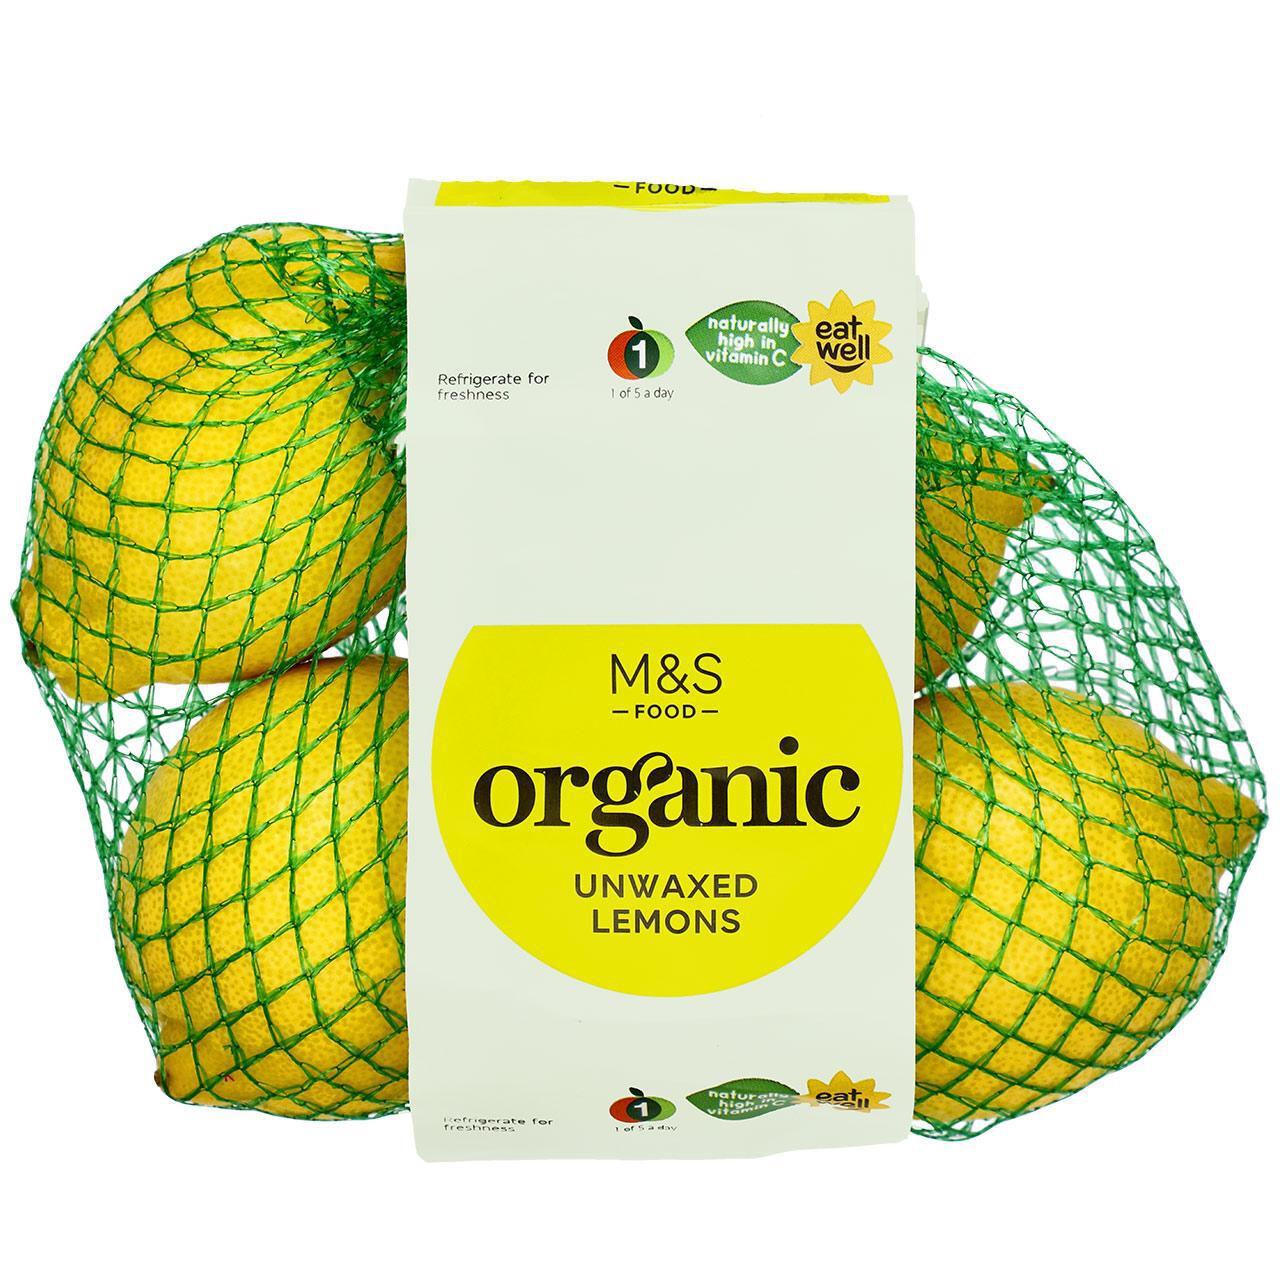 M&S Organic Unwaxed Lemons 4 per pack